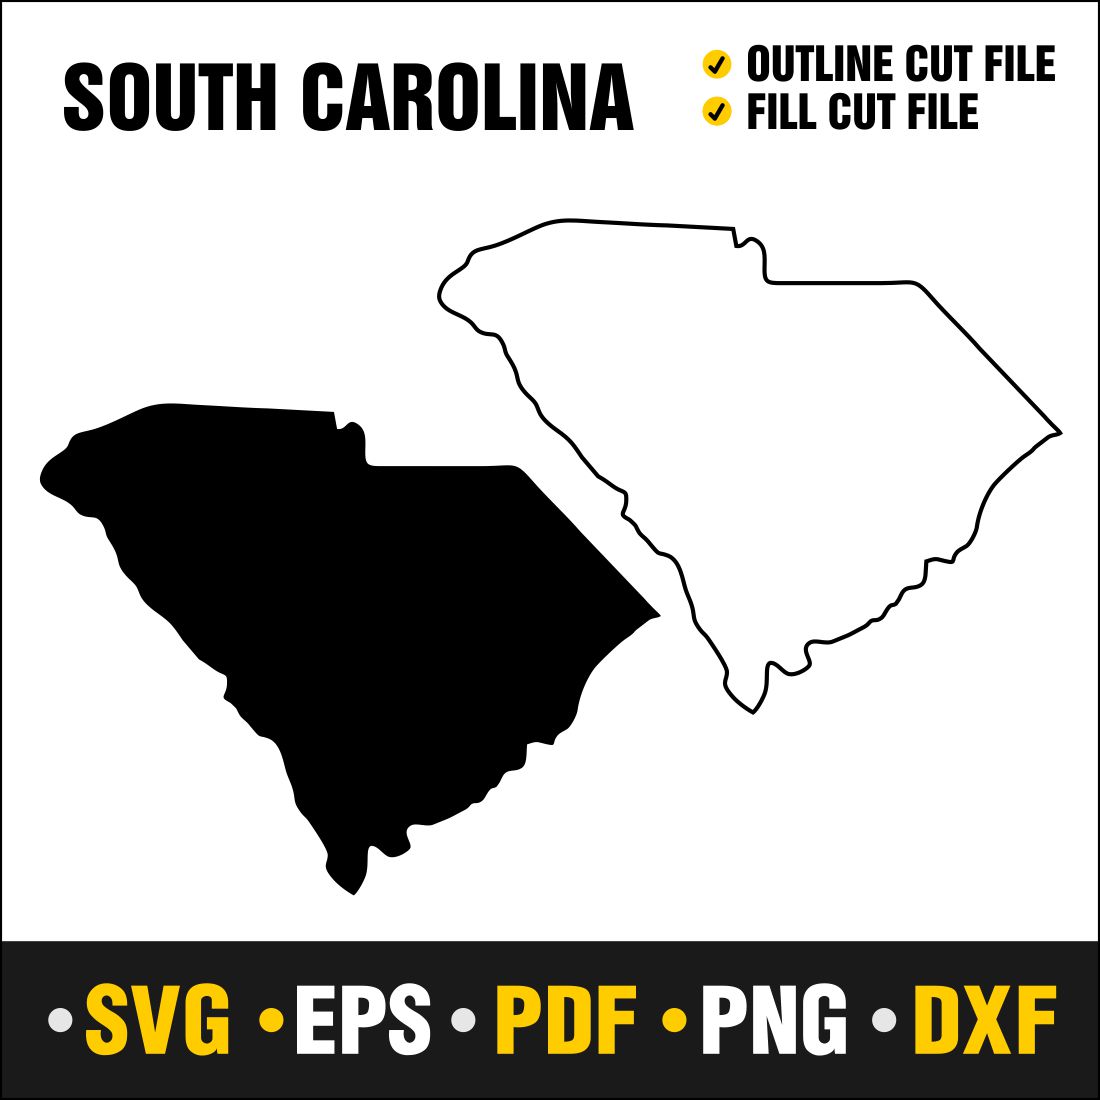 South Carolina SVG, PNG, PDF, EPS & DXF cover image.